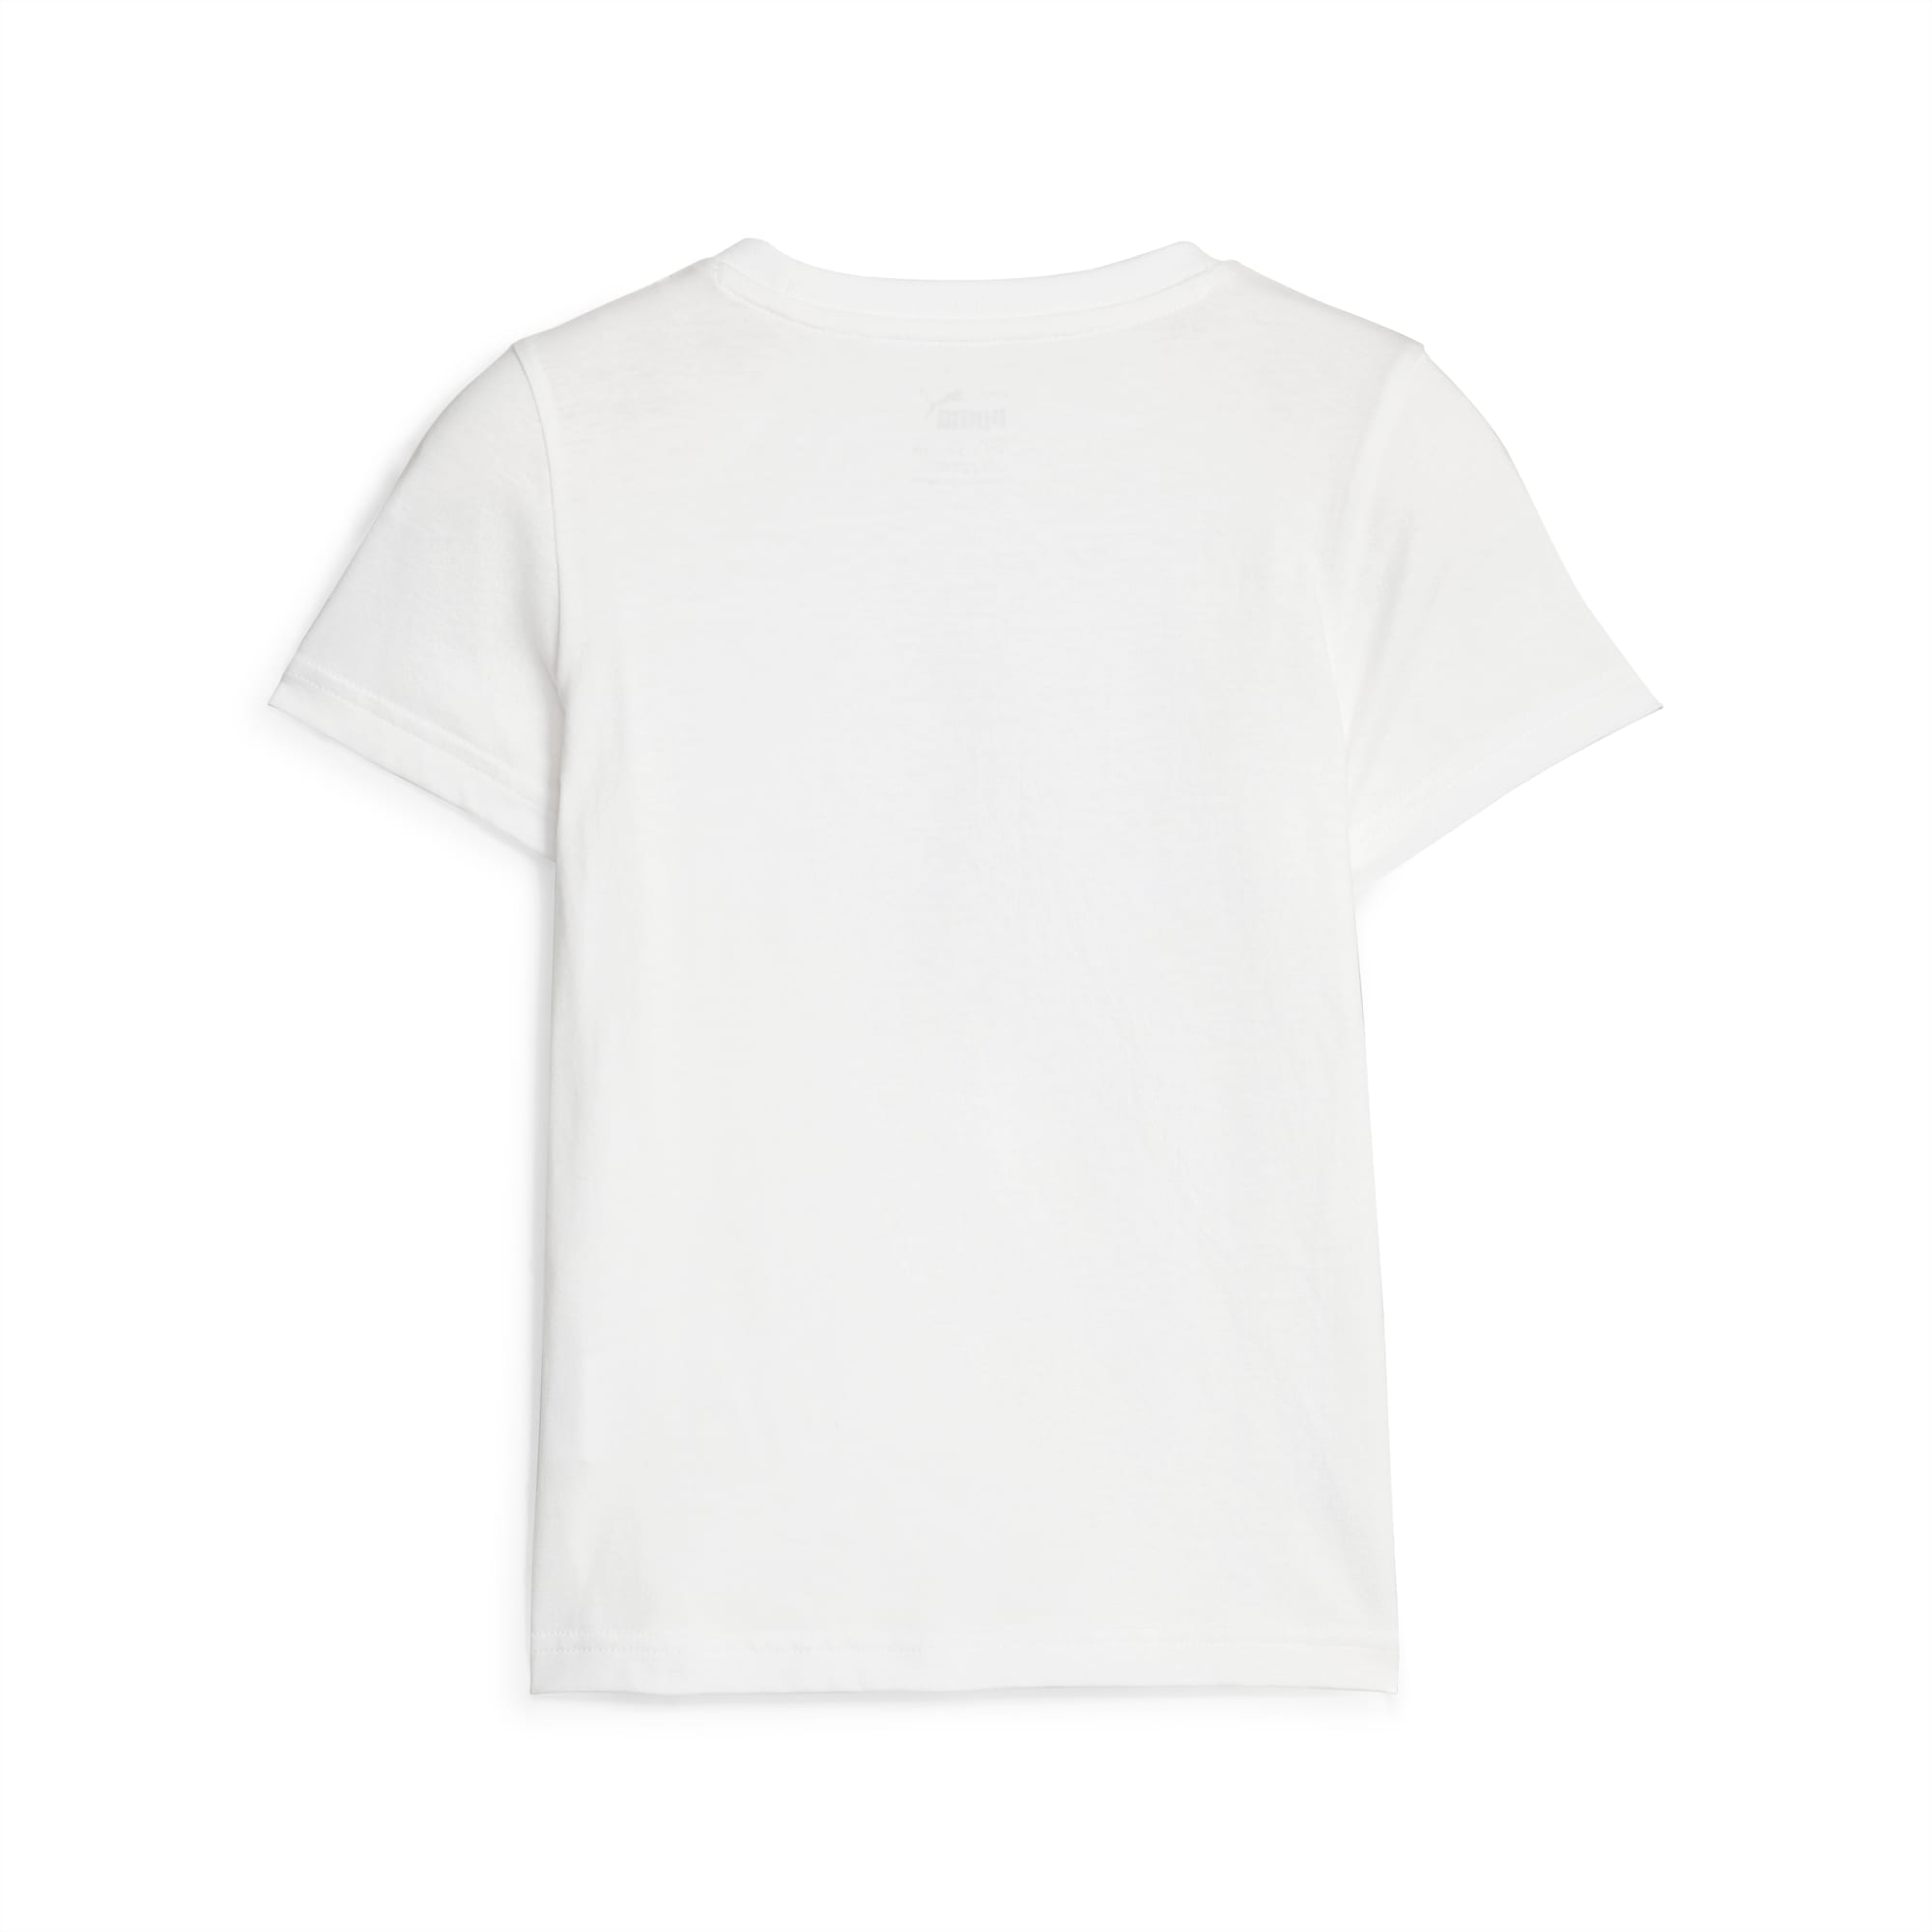 PUMA Essentials Mix Match Kids' T-Shirt, White, Size 92, Clothing